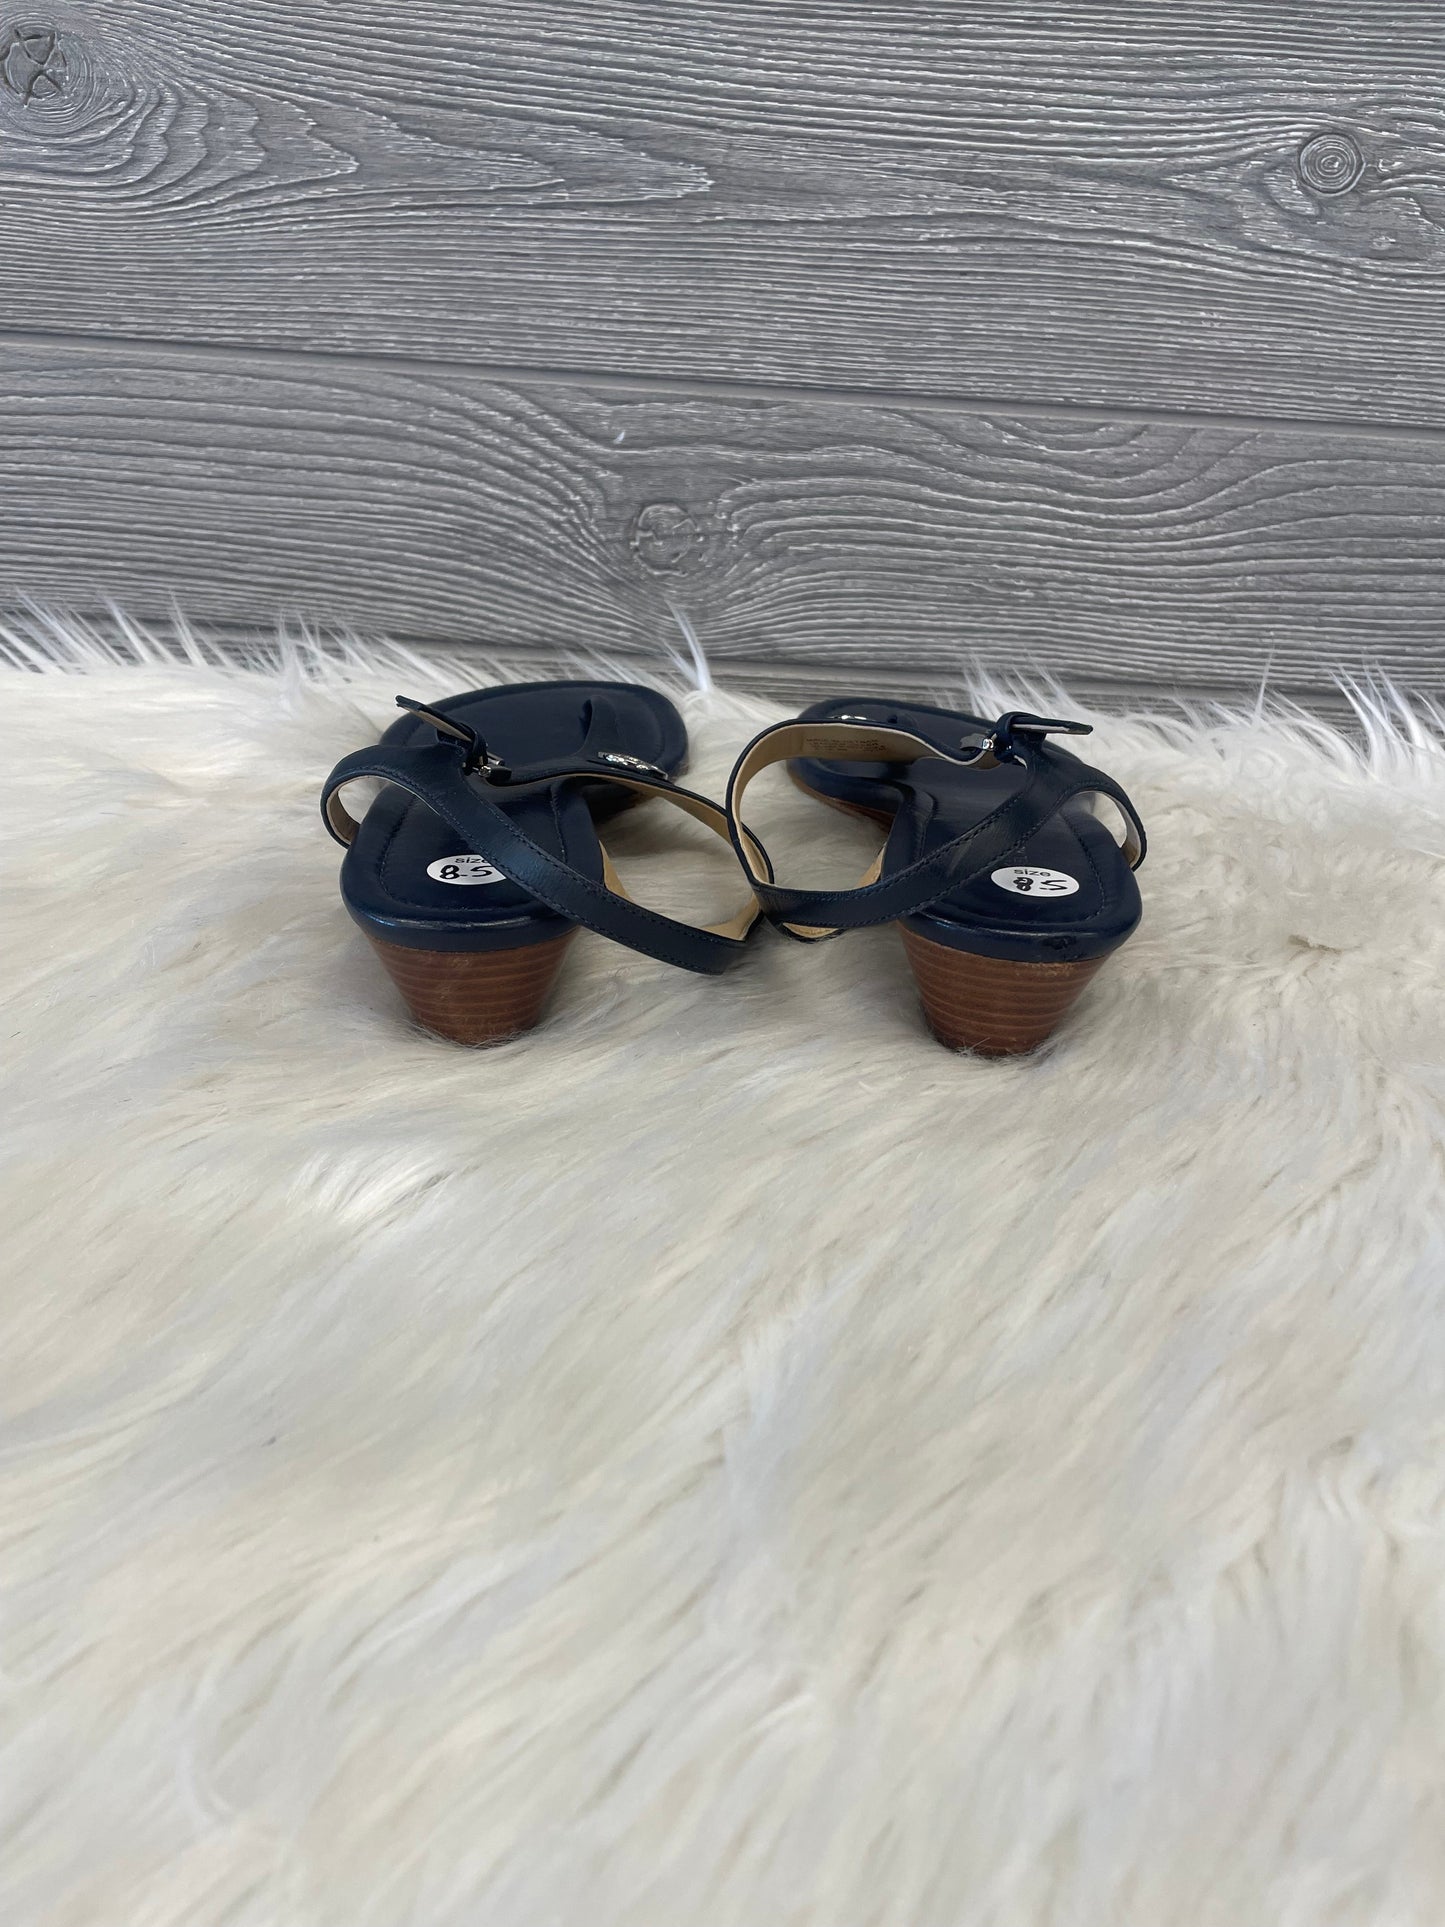 Sandals Heels Wedge By Michael Kors  Size: 8.5